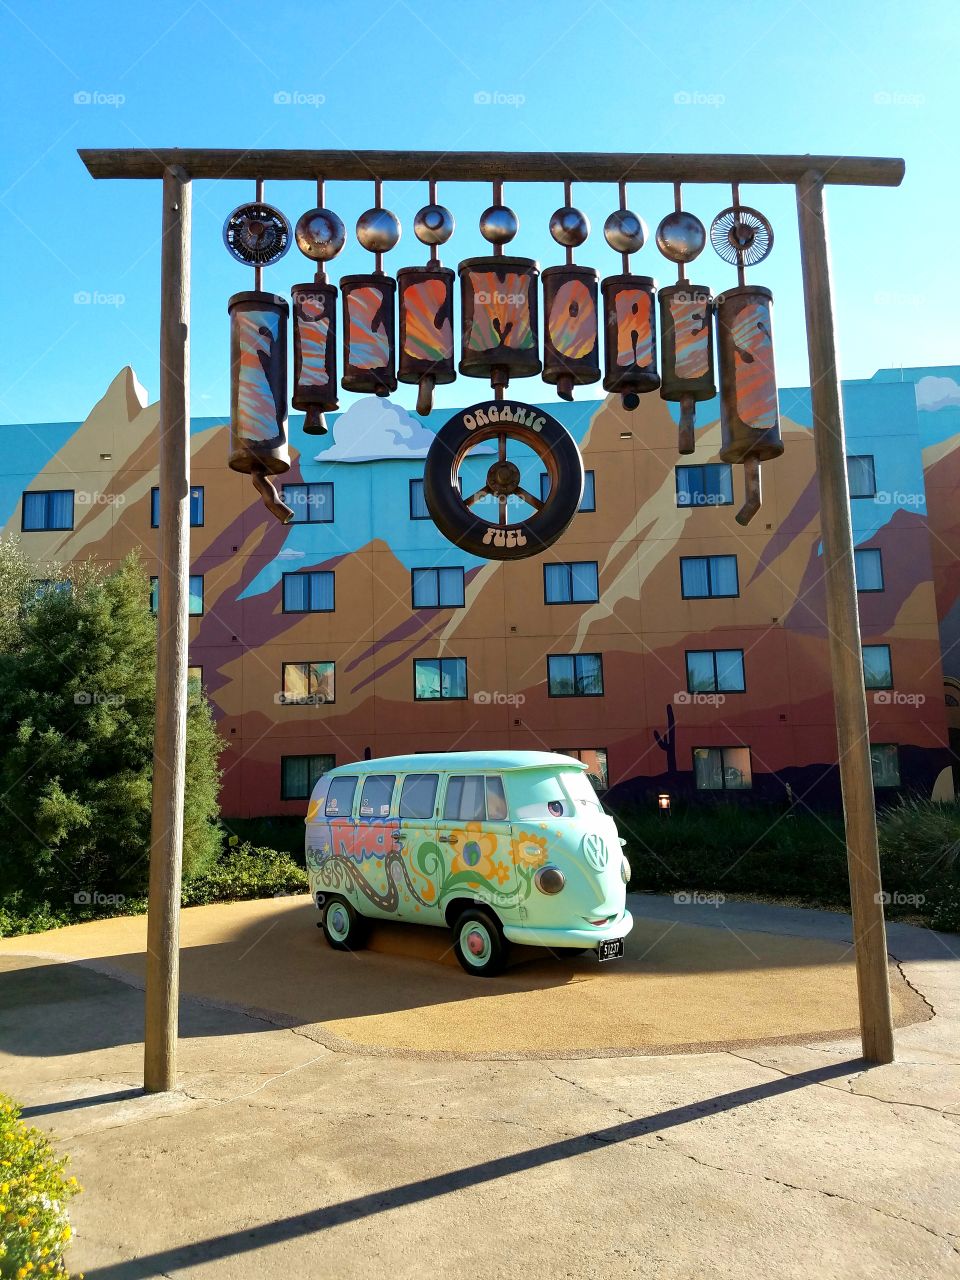 Disney's Art of Animation resort Cars